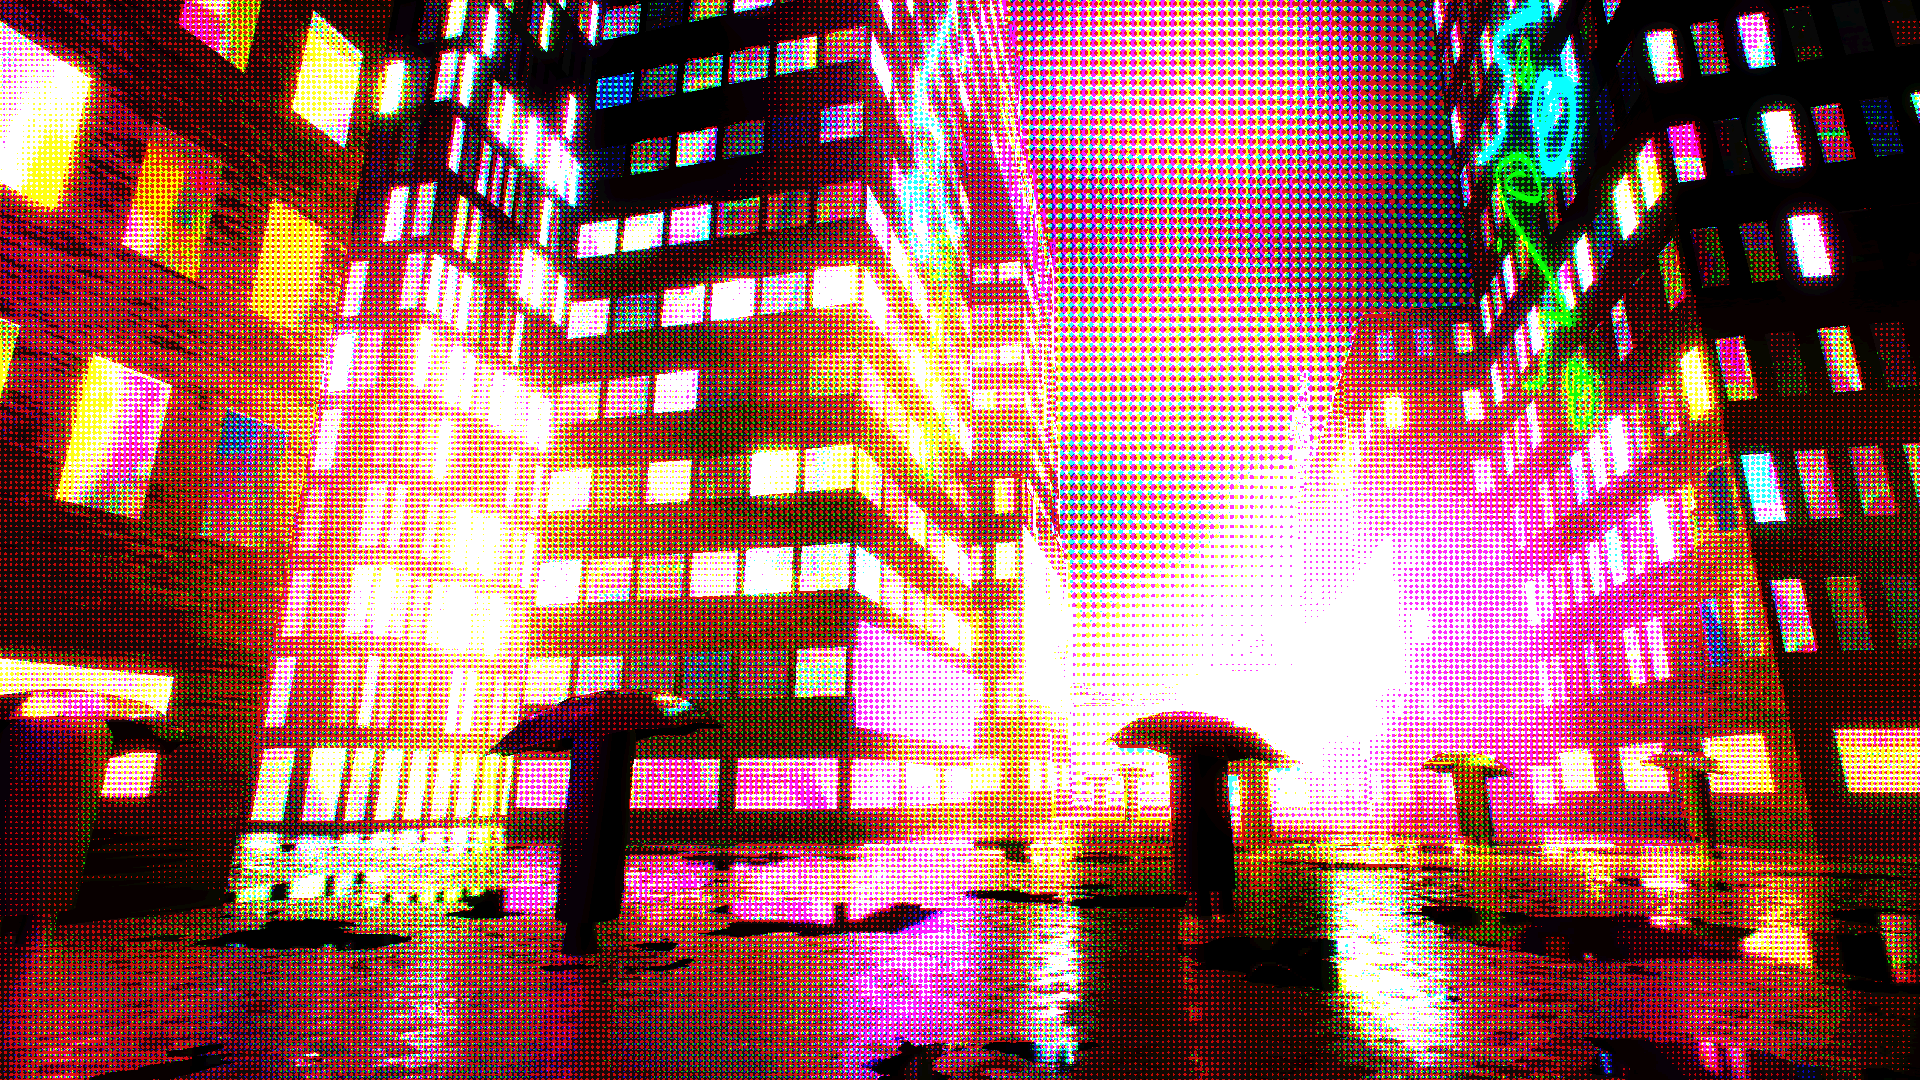 City in Pink (2020) by Josien Vos